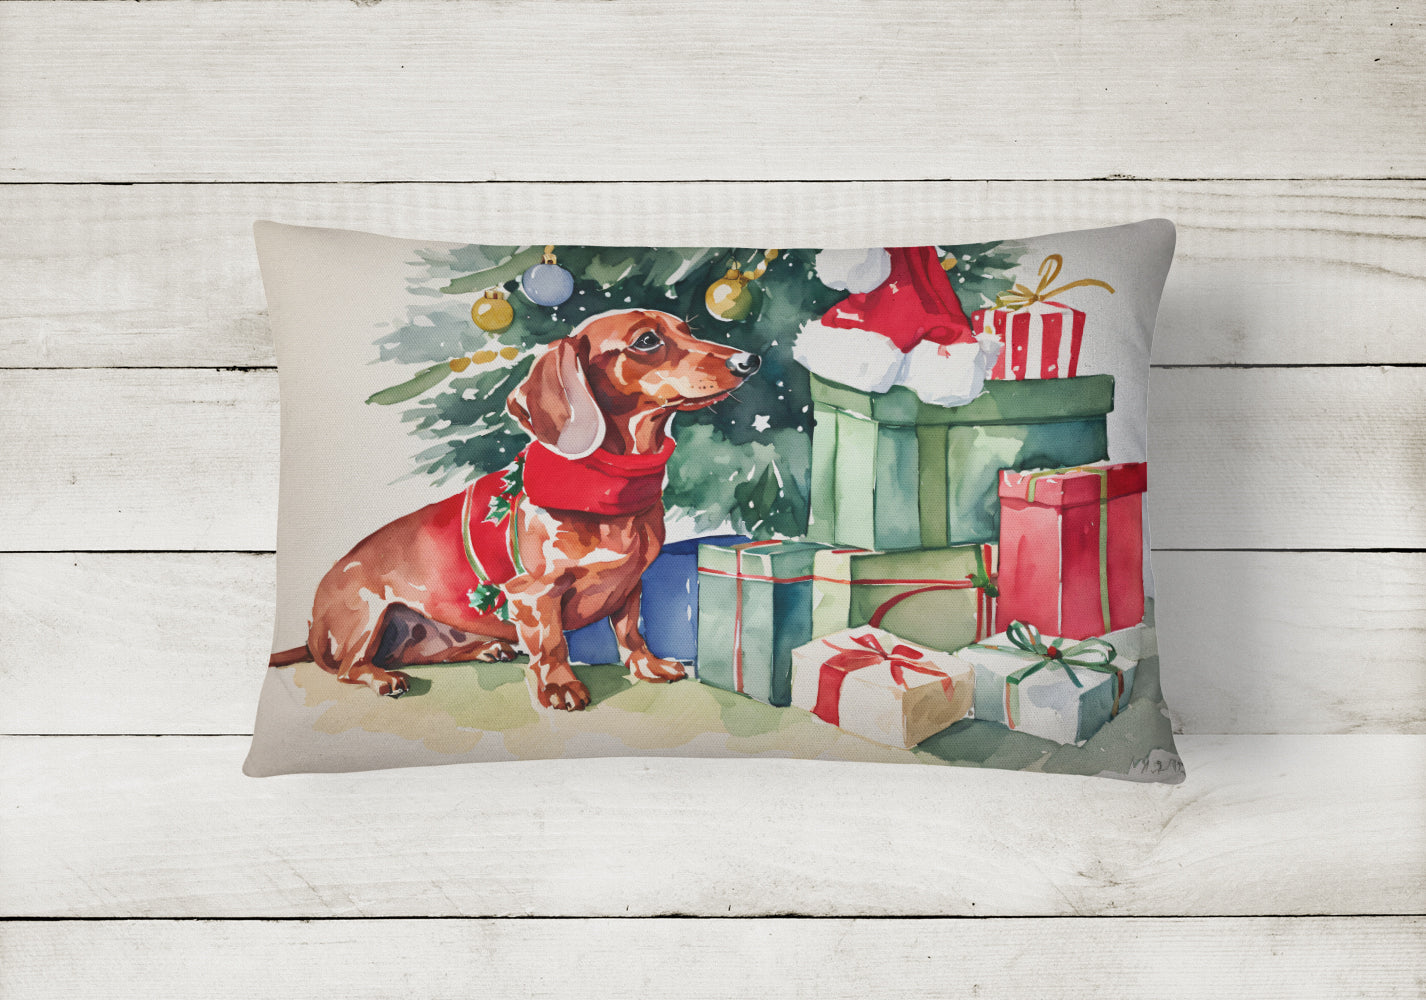 Dachshund Christmas Fabric Decorative Pillow